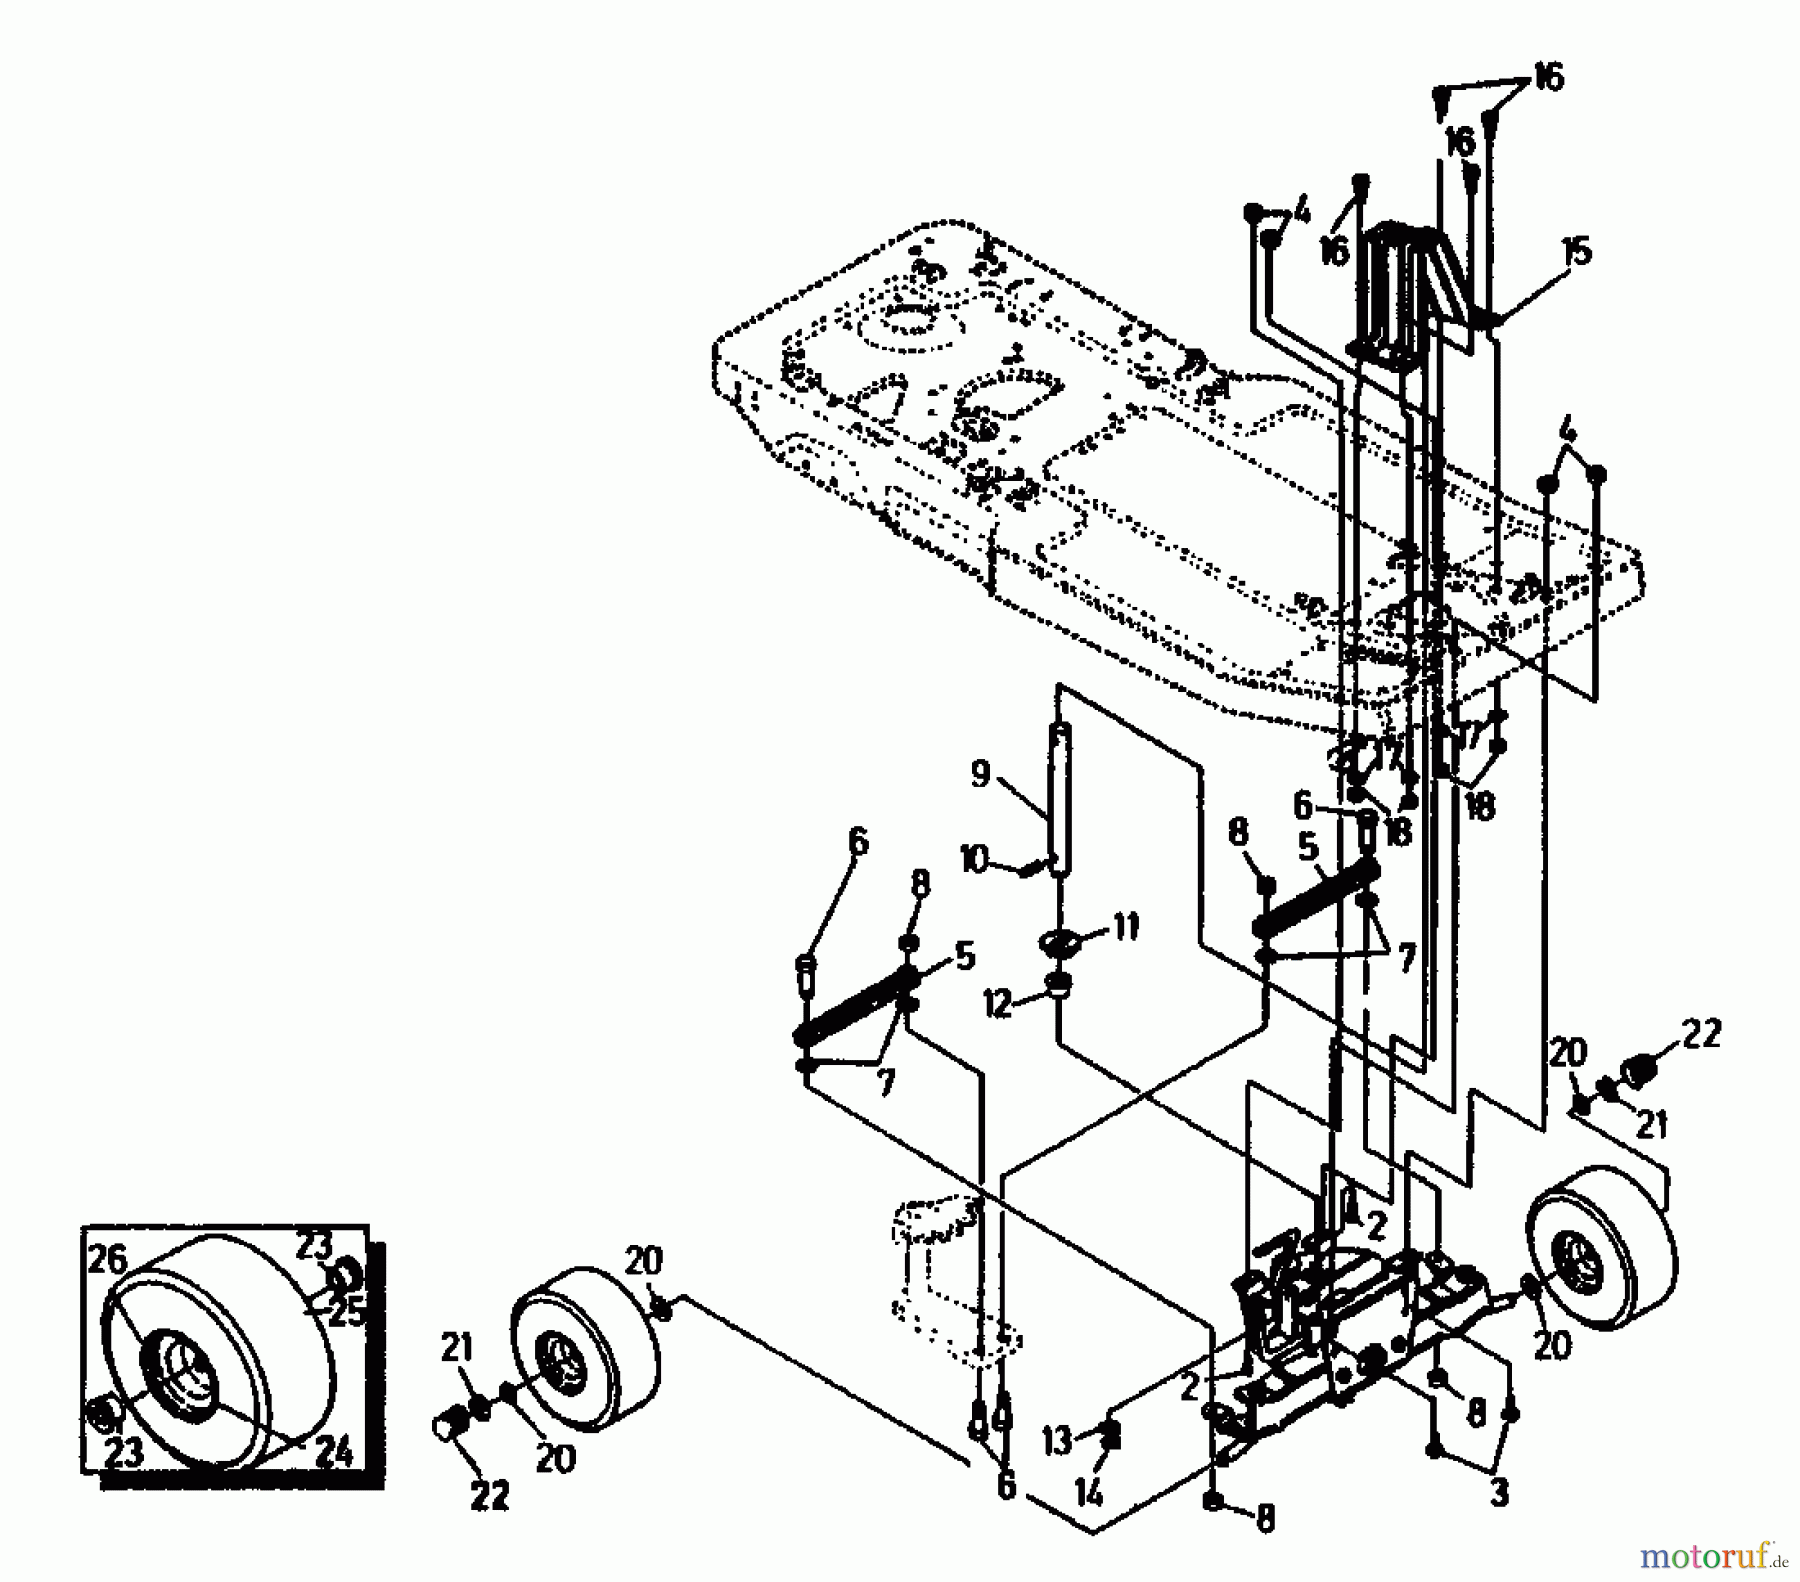  Gutbrod Rasentraktoren ASB 90-10 04015.01  (1991) Räder vorne 11x4